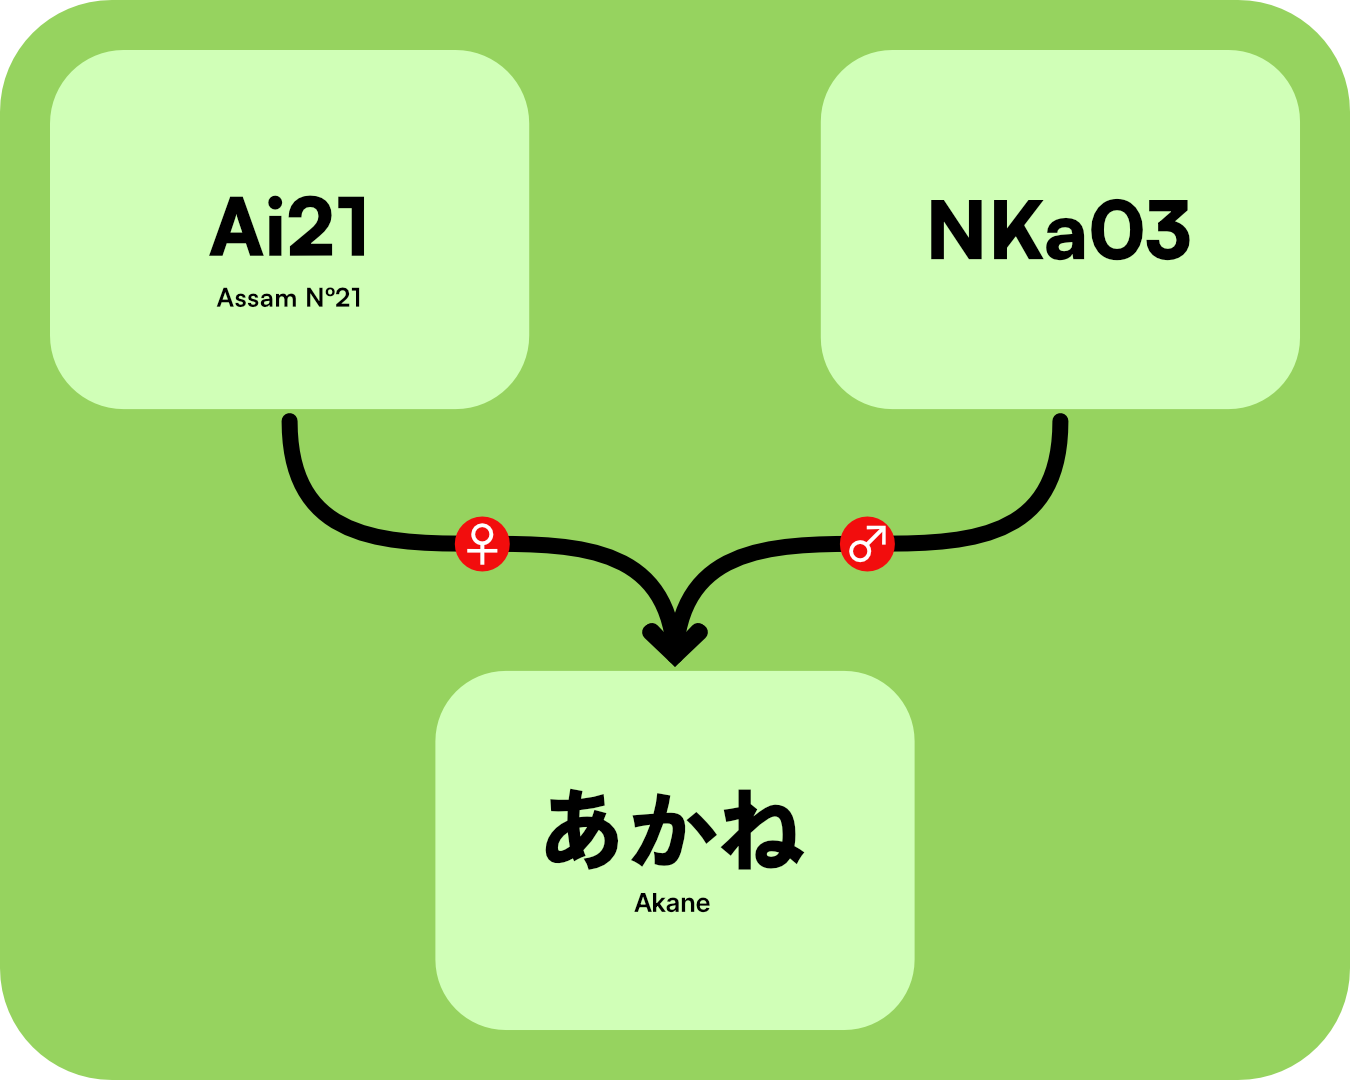 Genealogy tree of the Akane cultivar